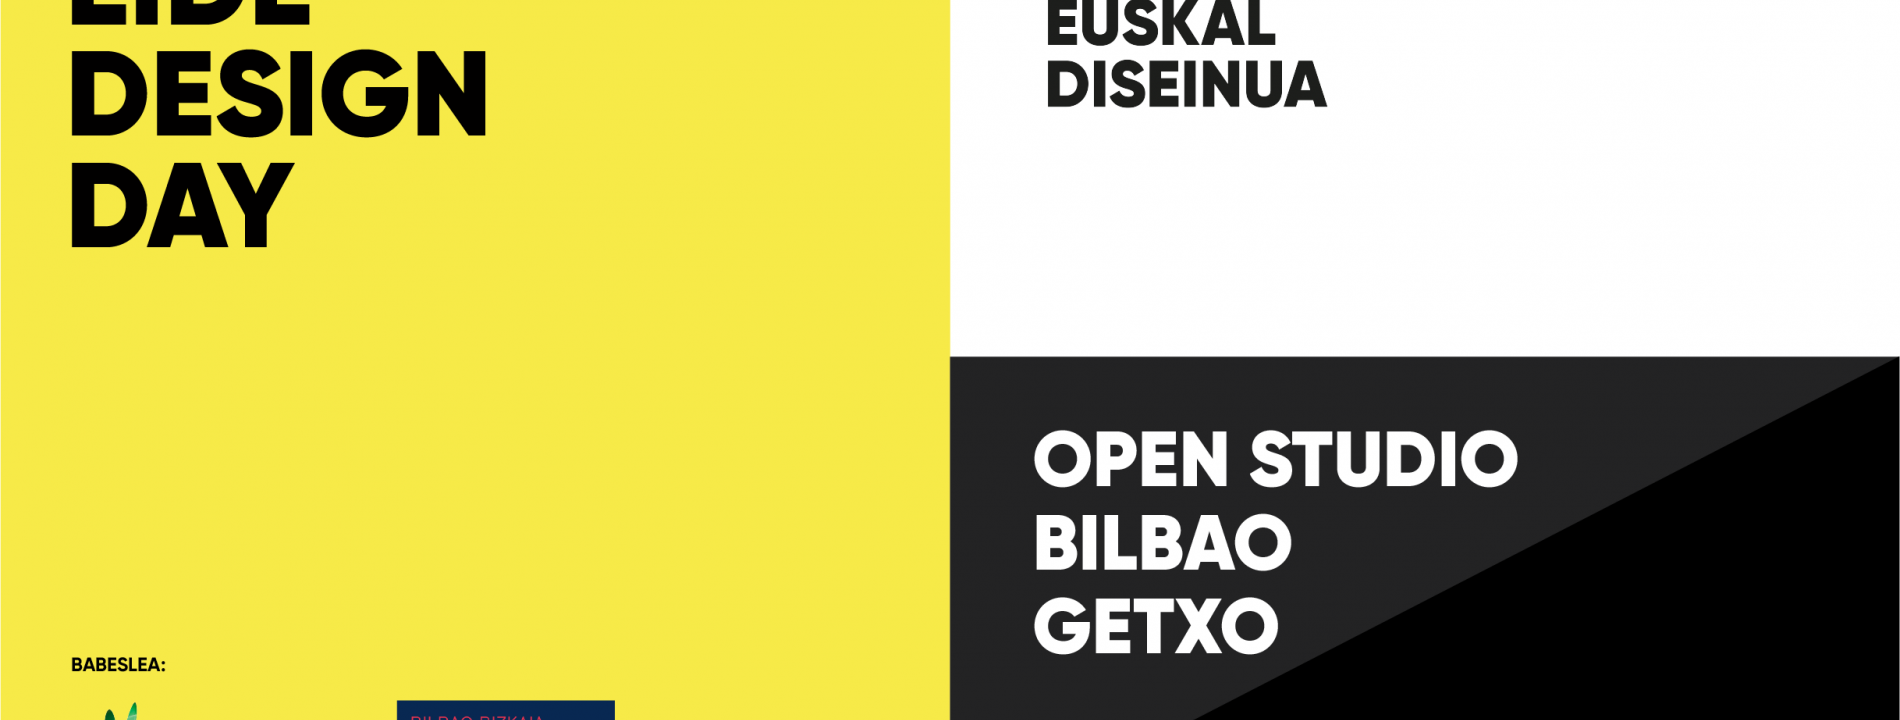 OPEN STUDIO BILBAO GETXO